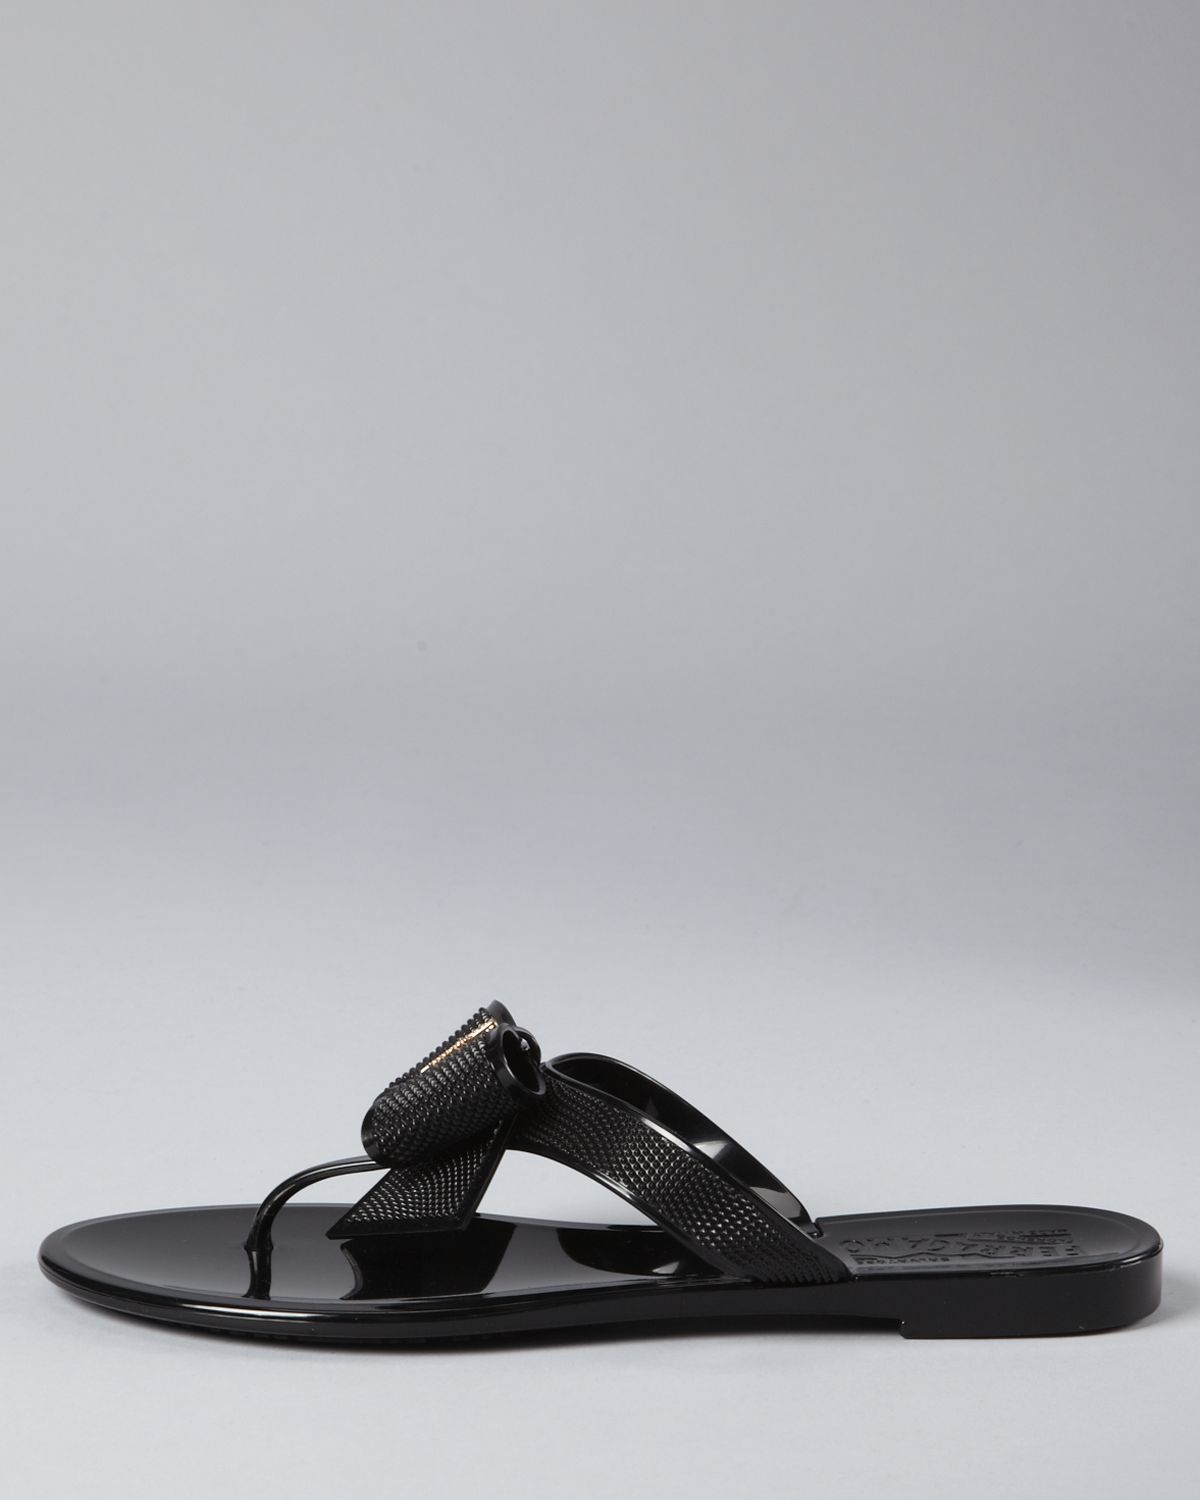 Ferragamo Sandals - Bali Jelly Flip Flop in Nero Black (Black) - Lyst